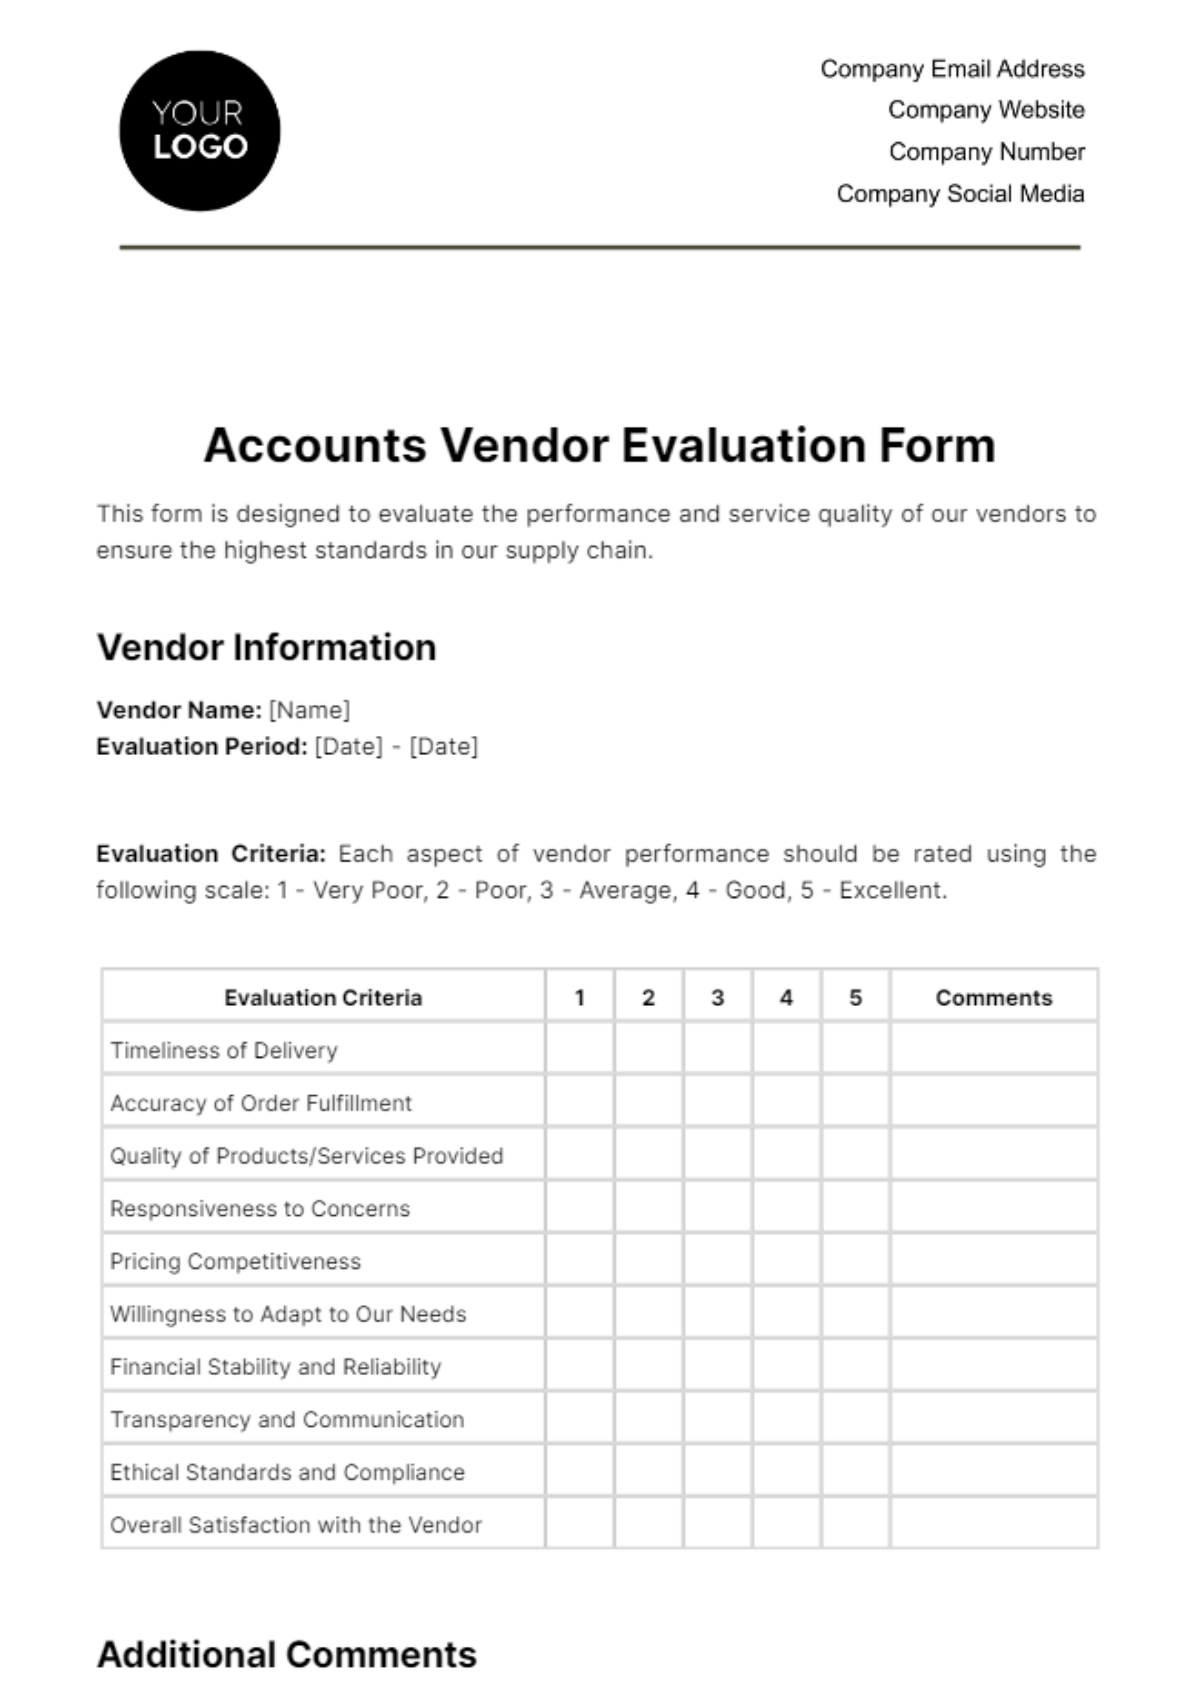 Free Accounts Vendor Evaluation Form Template